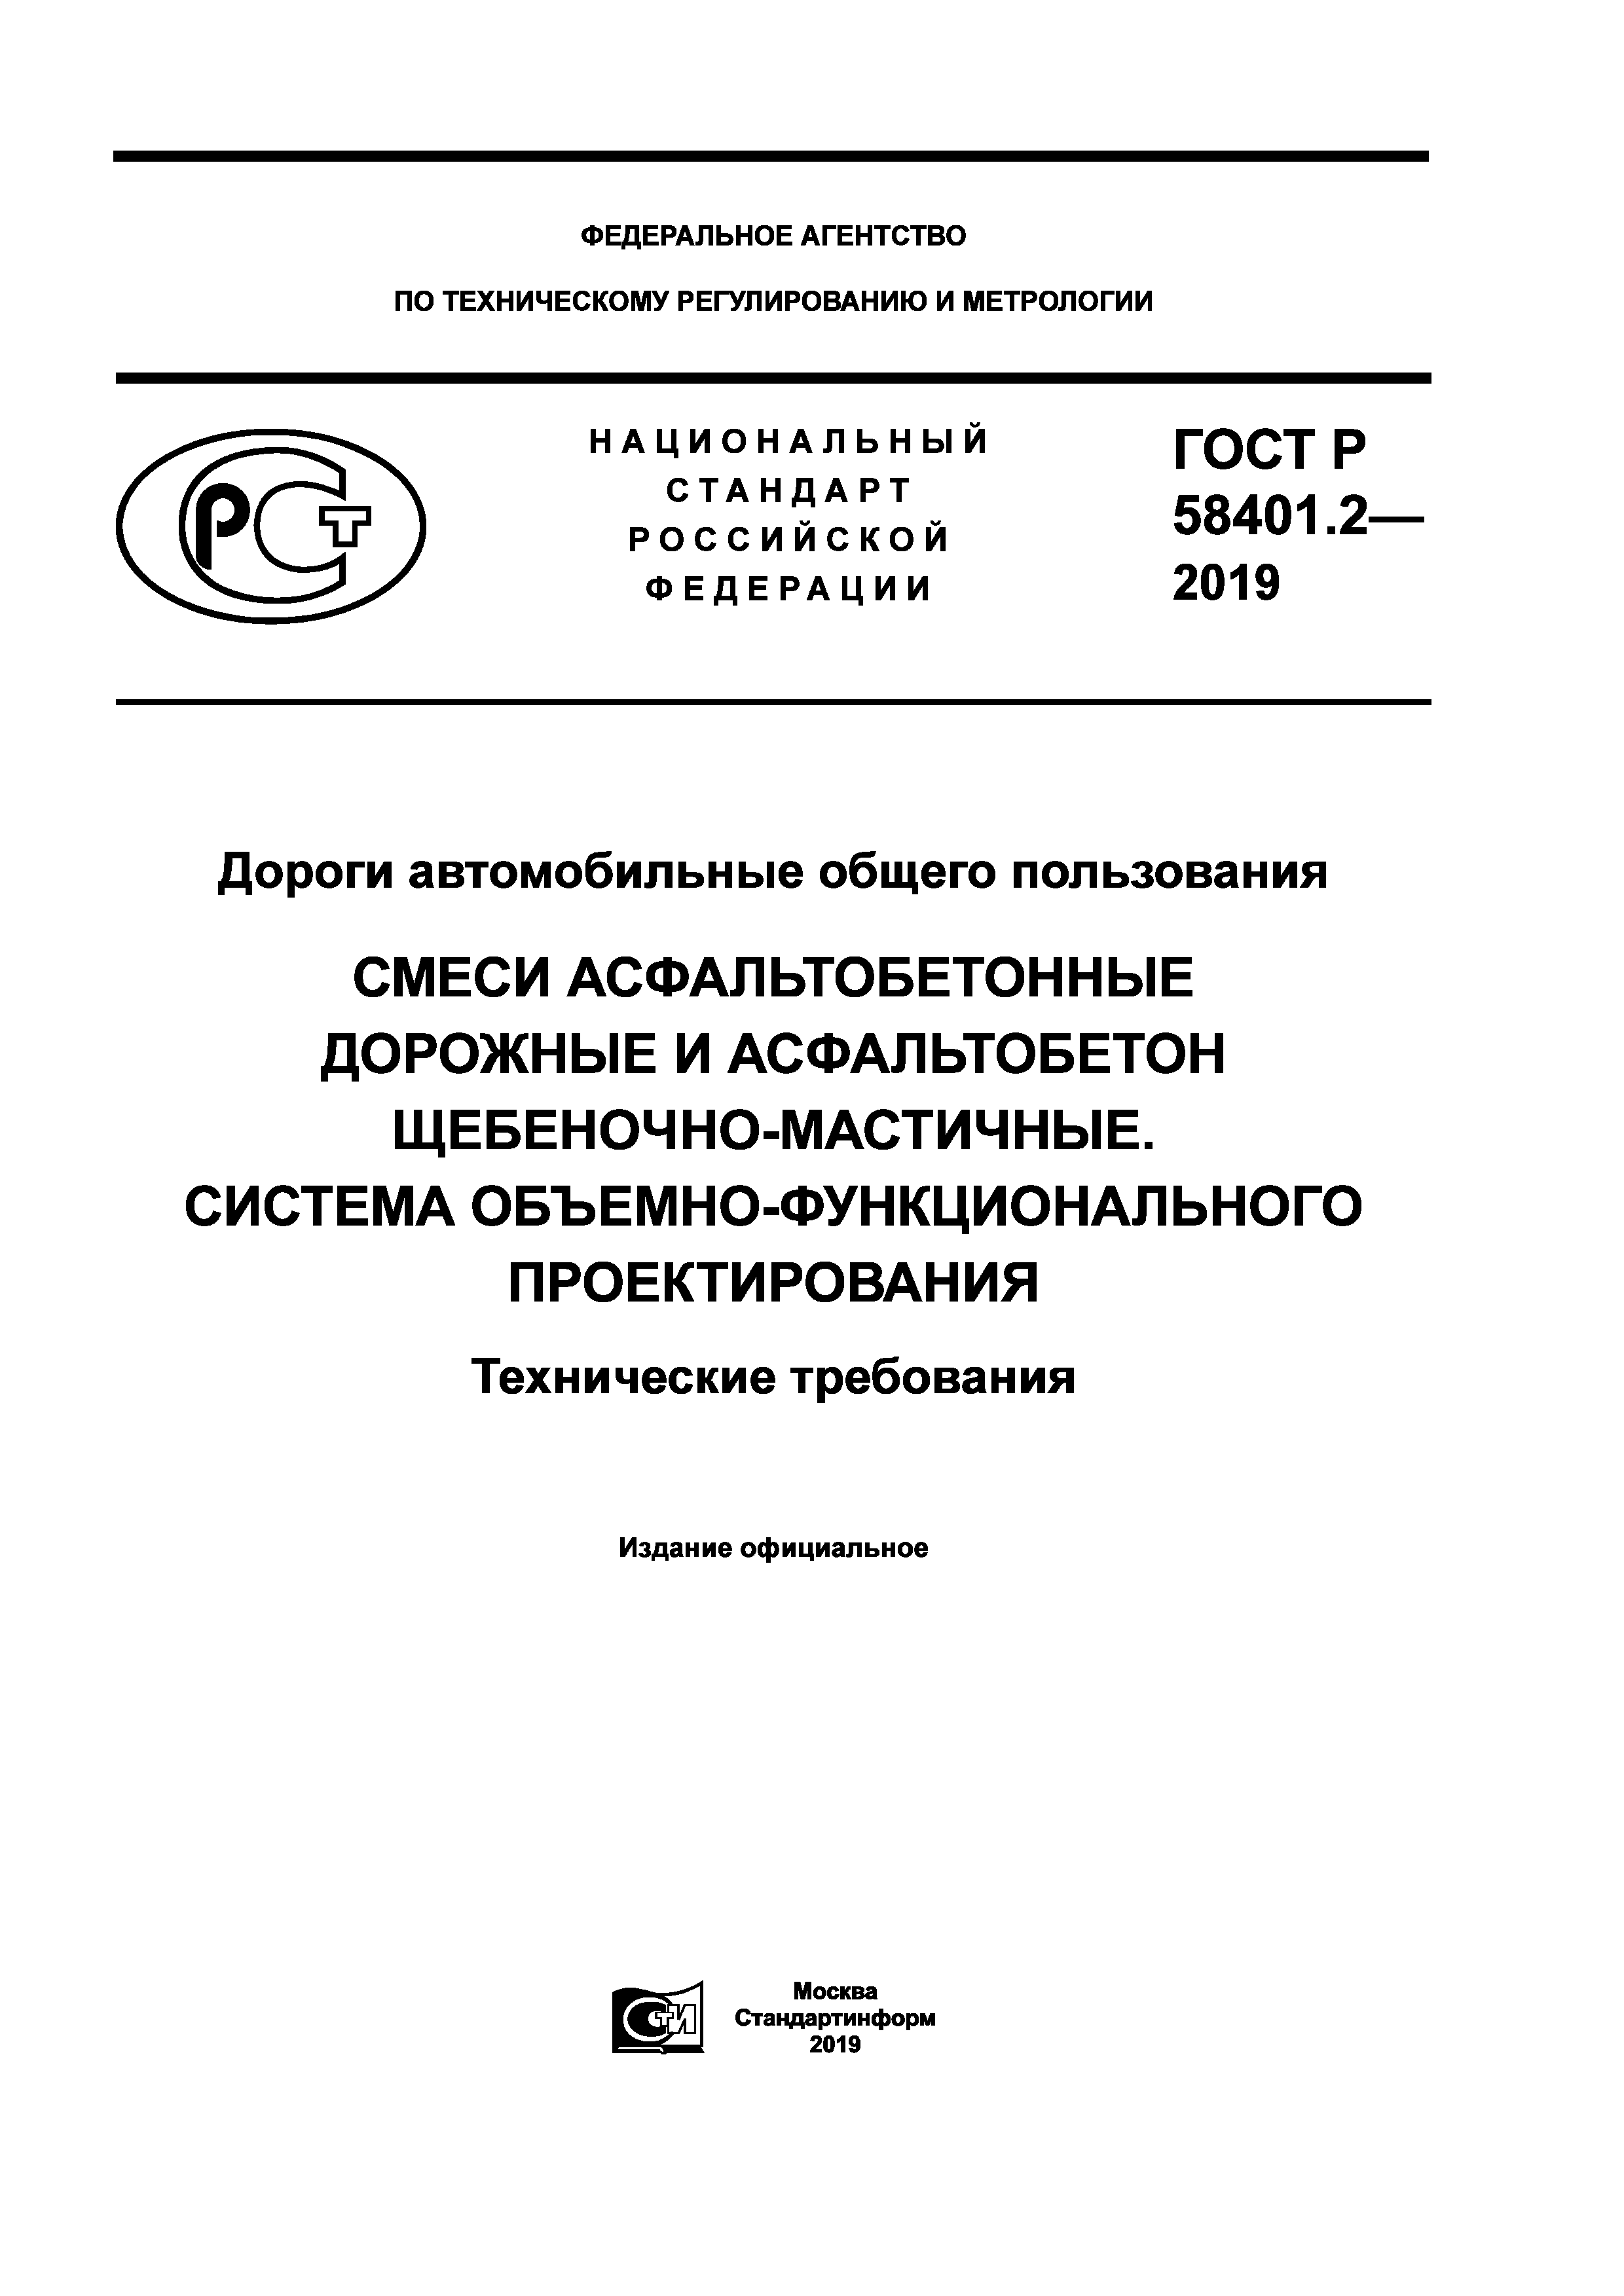 ГОСТ Р 58401.2-2019